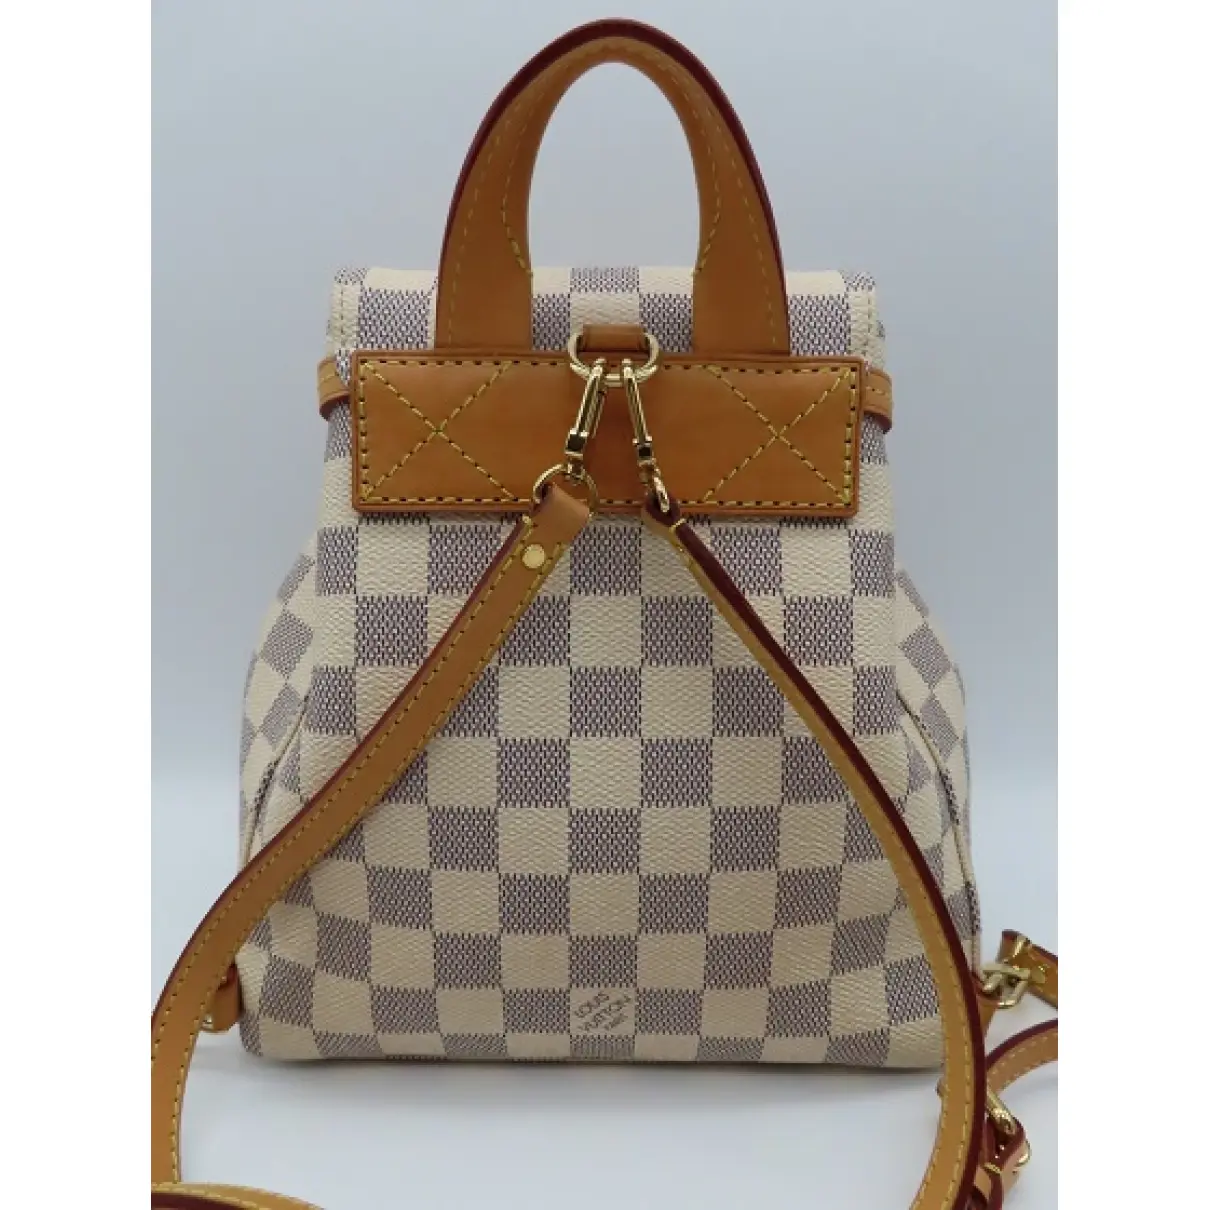 Buy Louis Vuitton Sperone leather handbag online